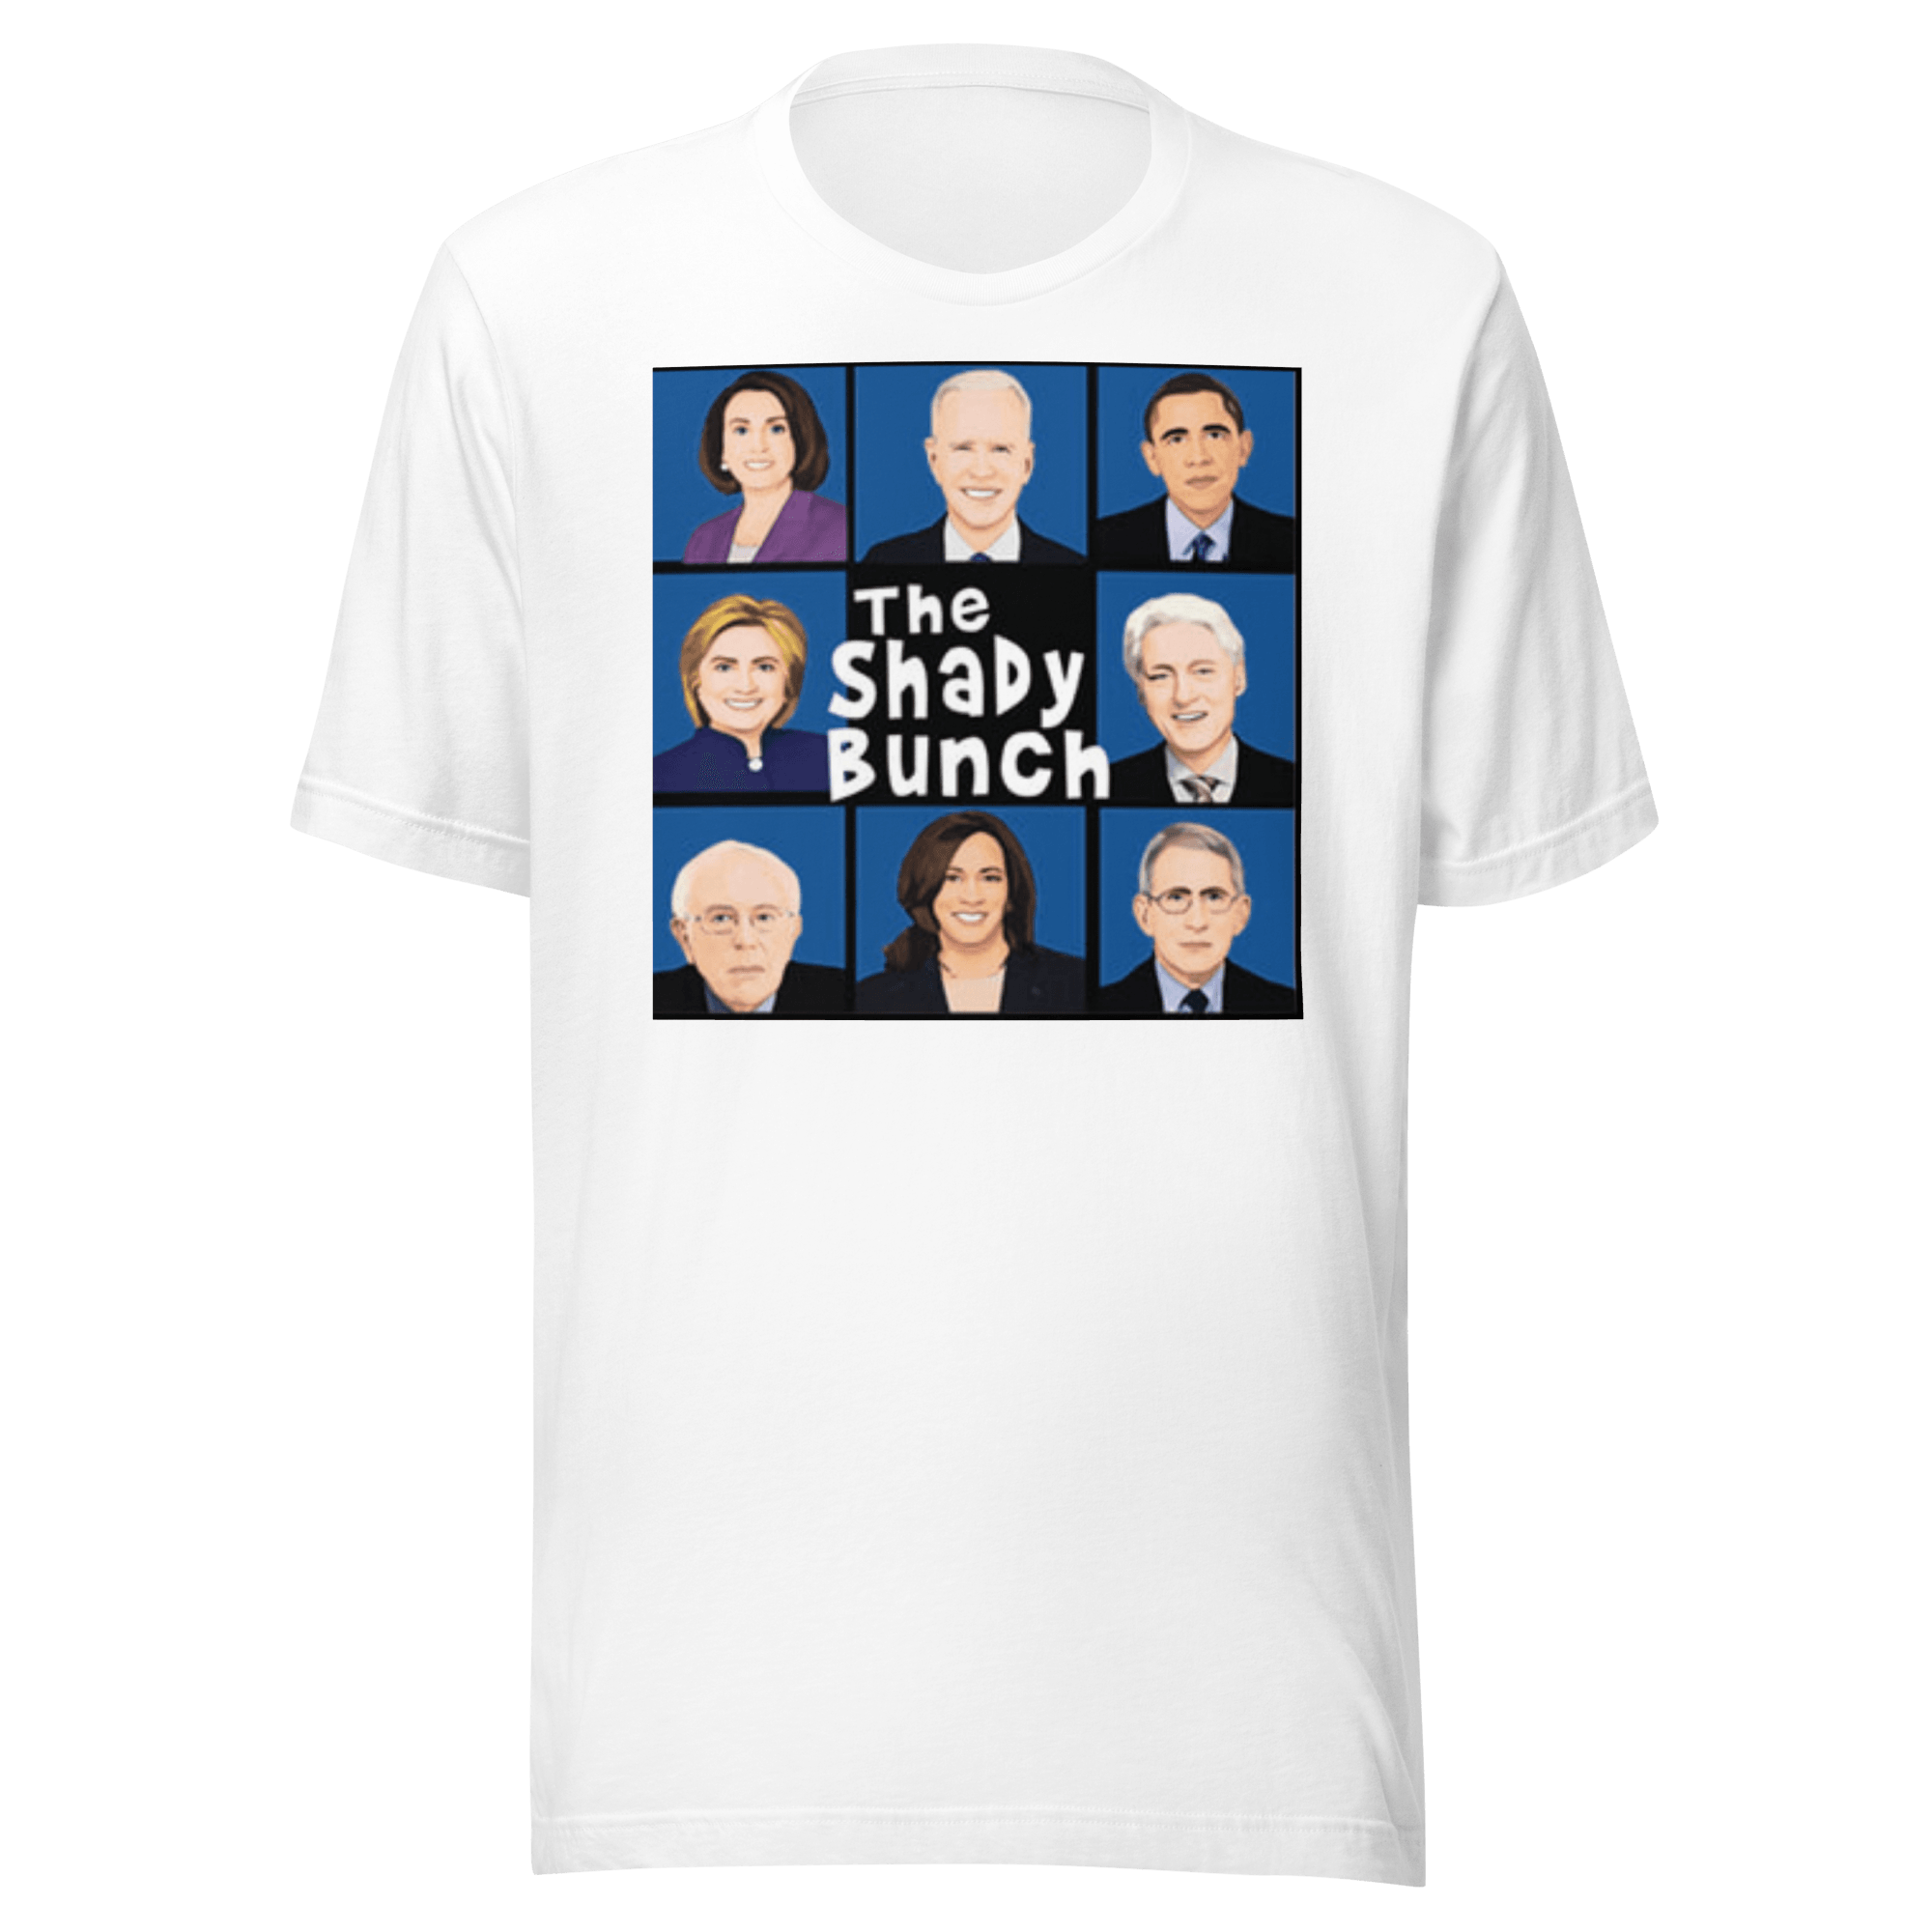 The Shady Bunch T-shirt Short Sleeve Ultra Soft 100% Cotton Crewneck Unisex Top - TopKoalaTee